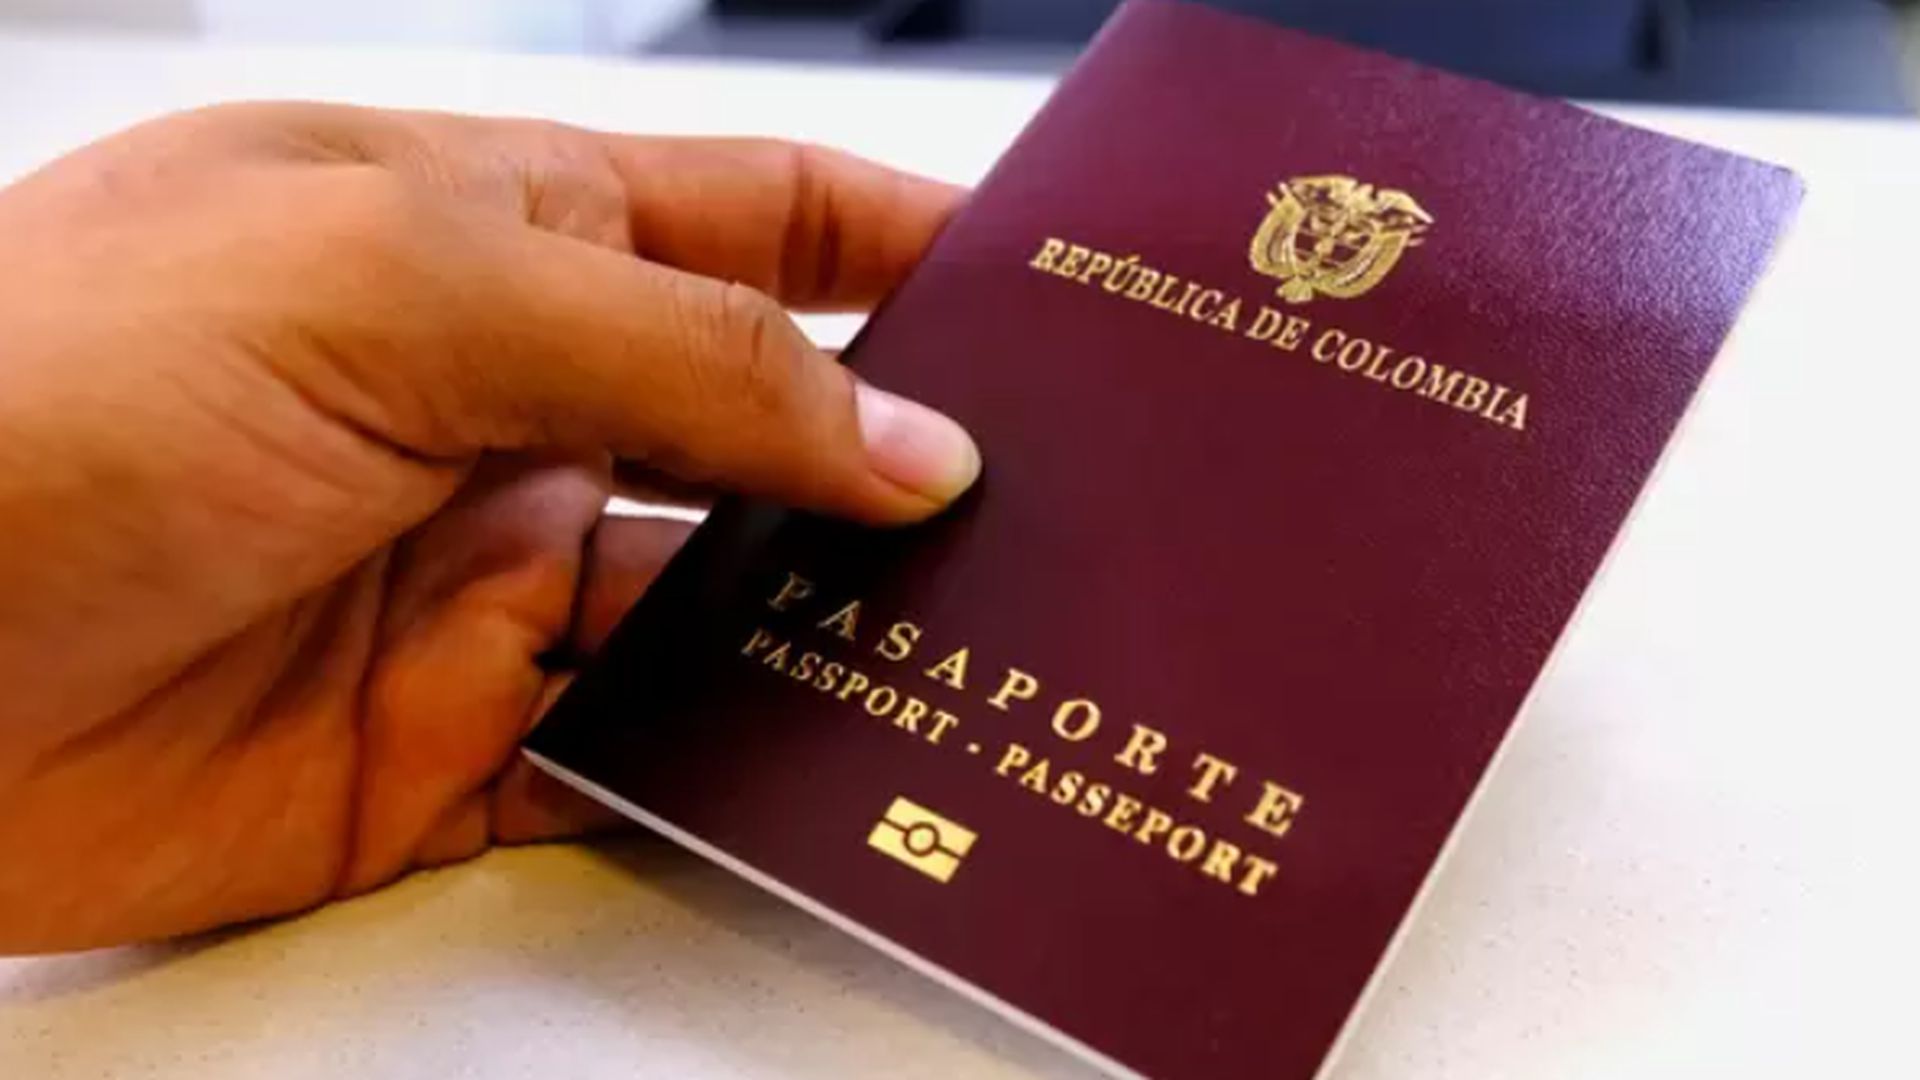 Cita previa pasaporte